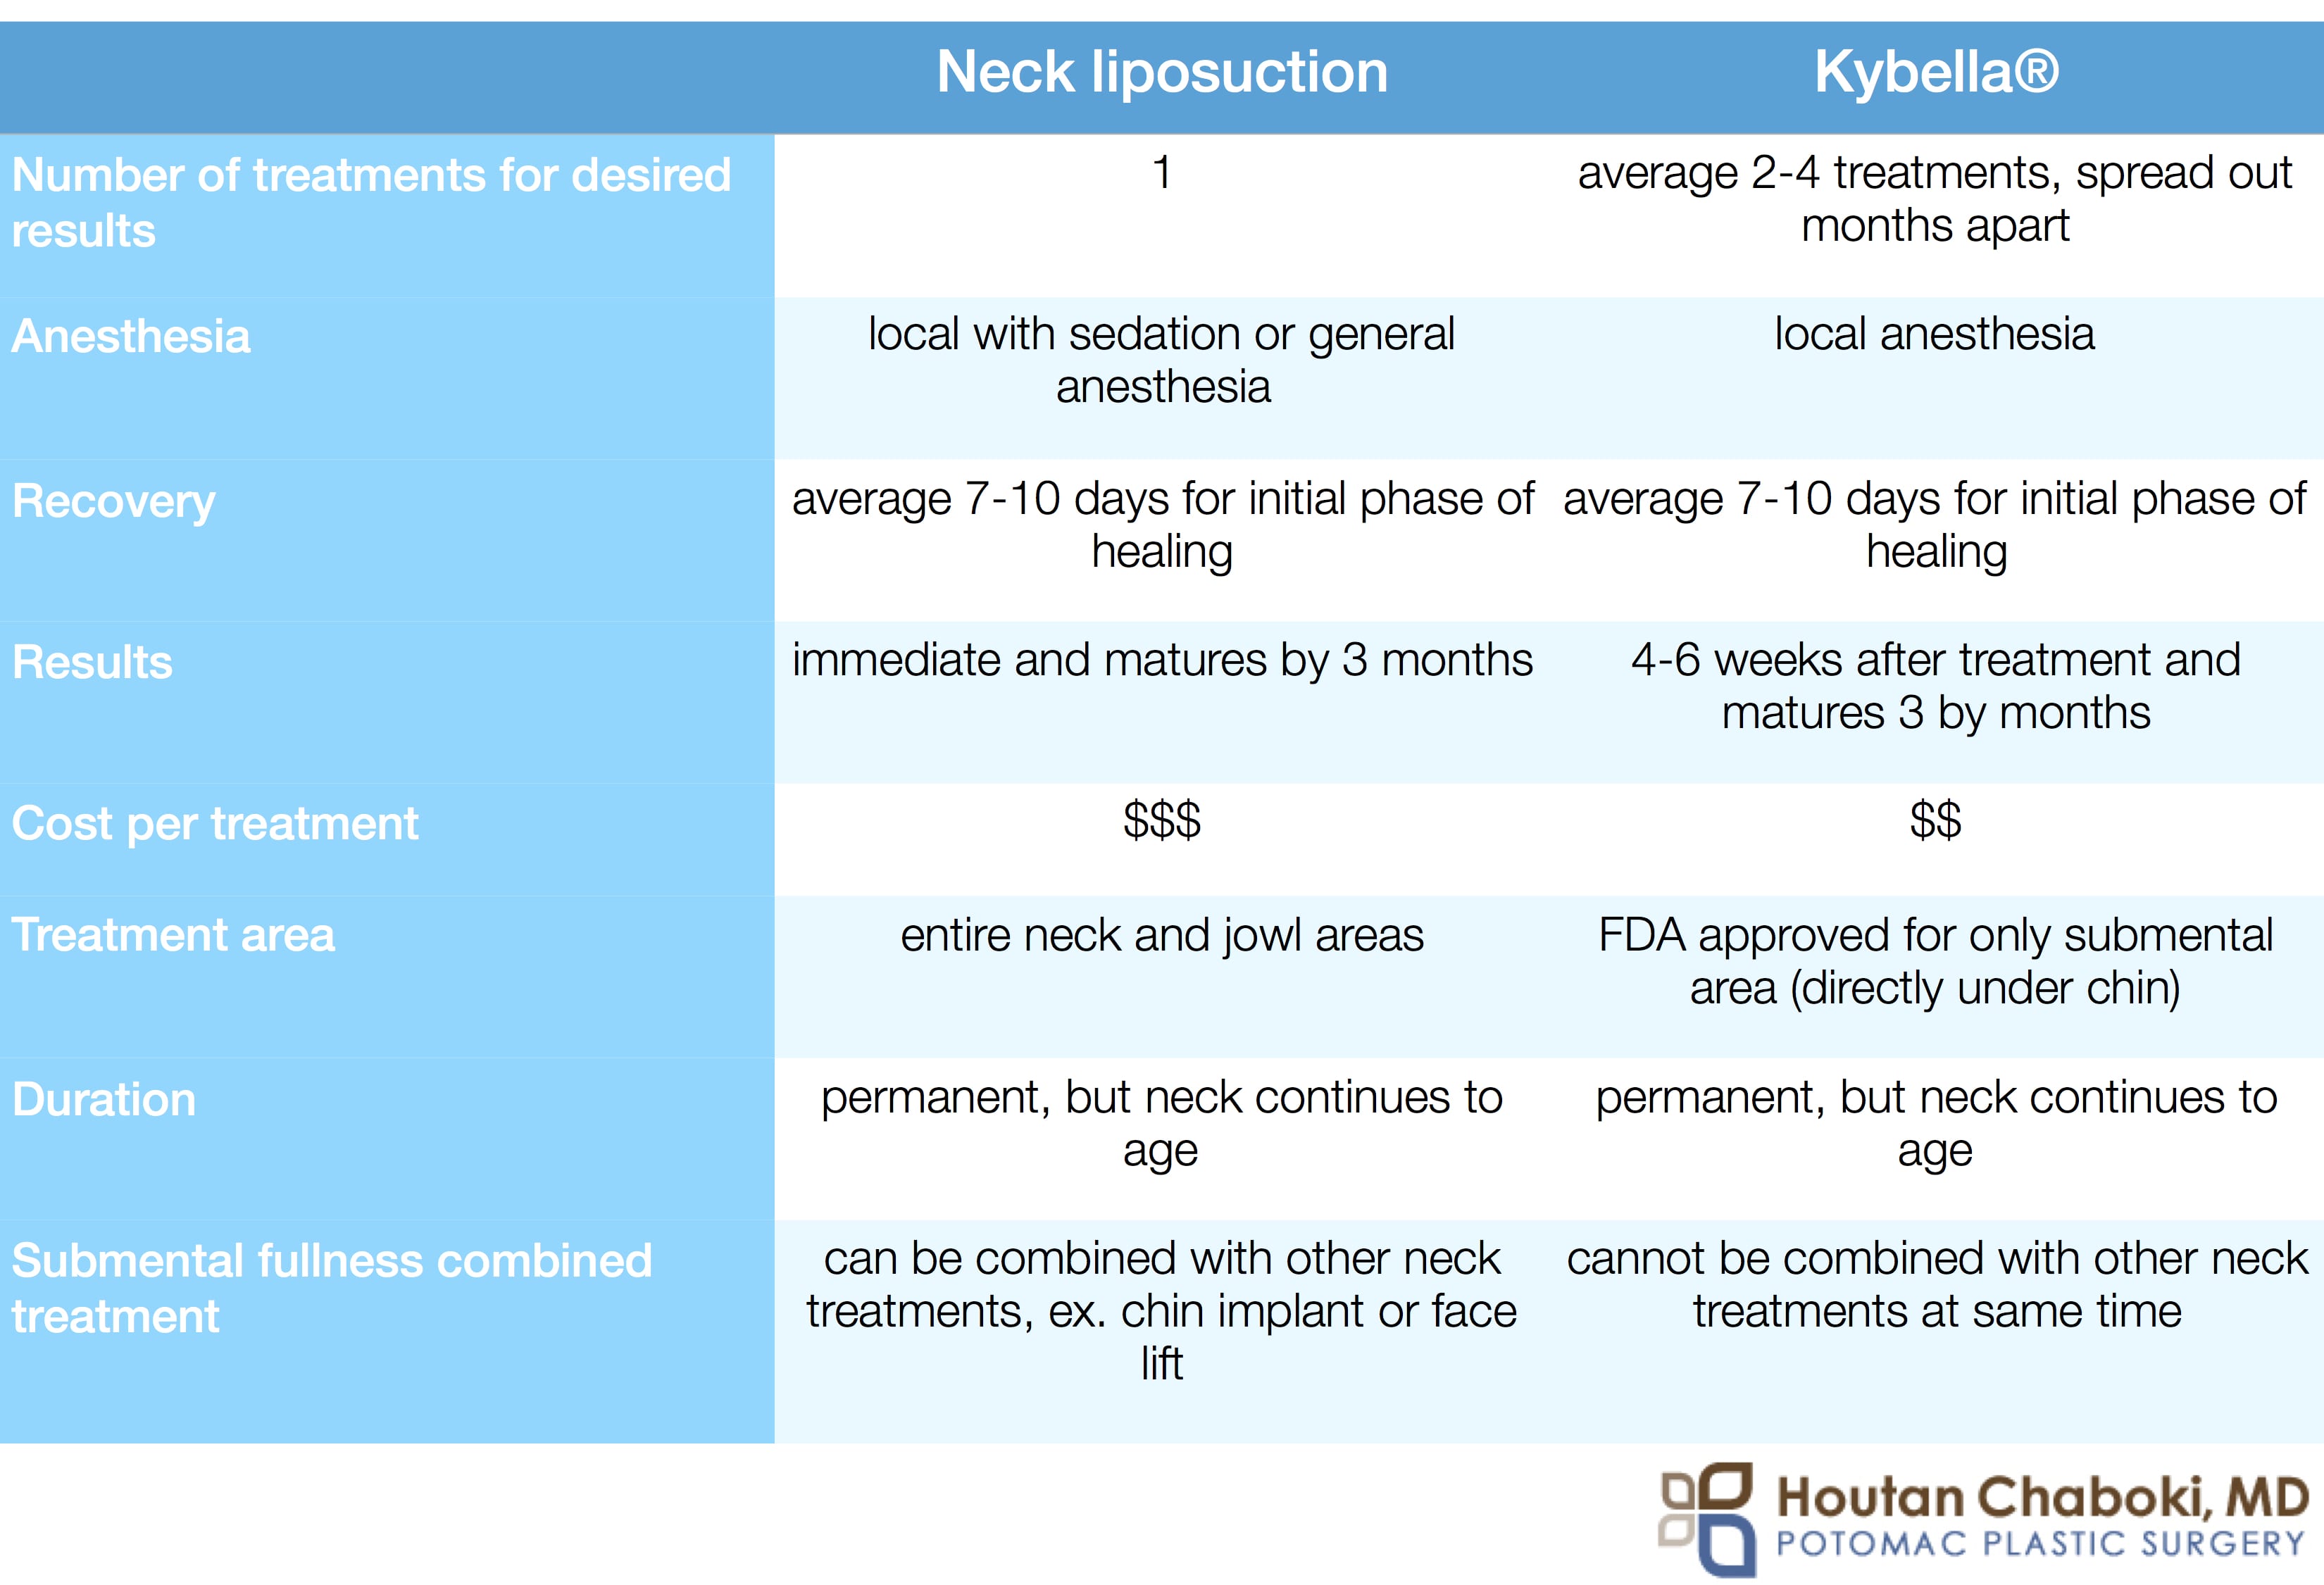 https://www.potomacplasticsurgery.com/content/uploads/2016/01/Blog-post-Kybella-vs-Neck-Liposuction.jpg